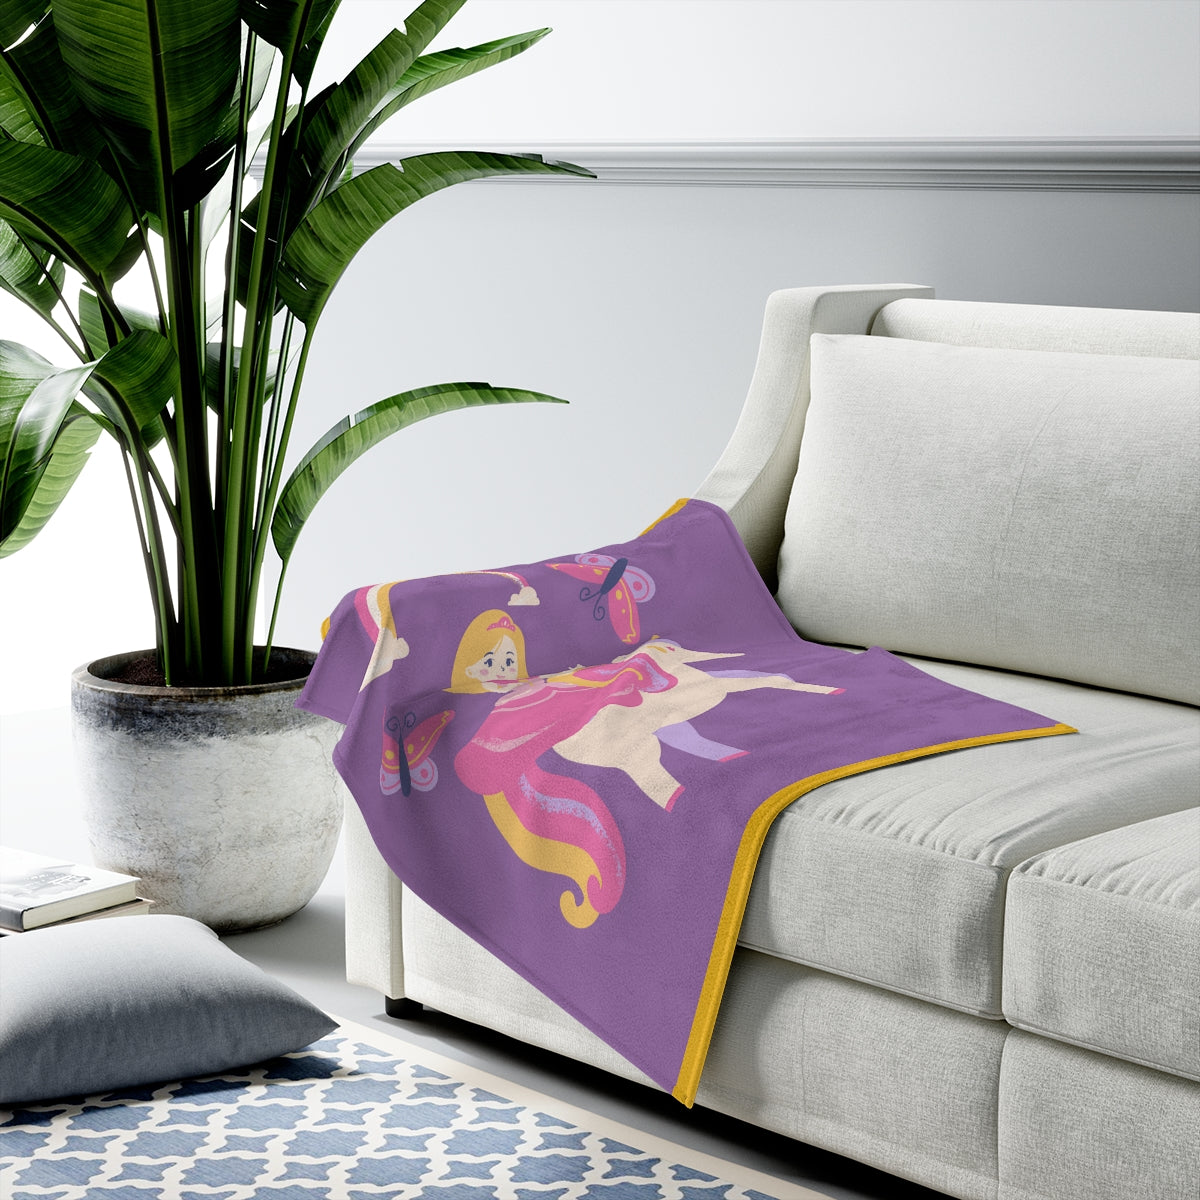 Kids Blankets Personalised, Unicorn Theme Throw Blanket, Plush Super Soft Cozy Throw Blankets 3 Sizes, Purple, Pink